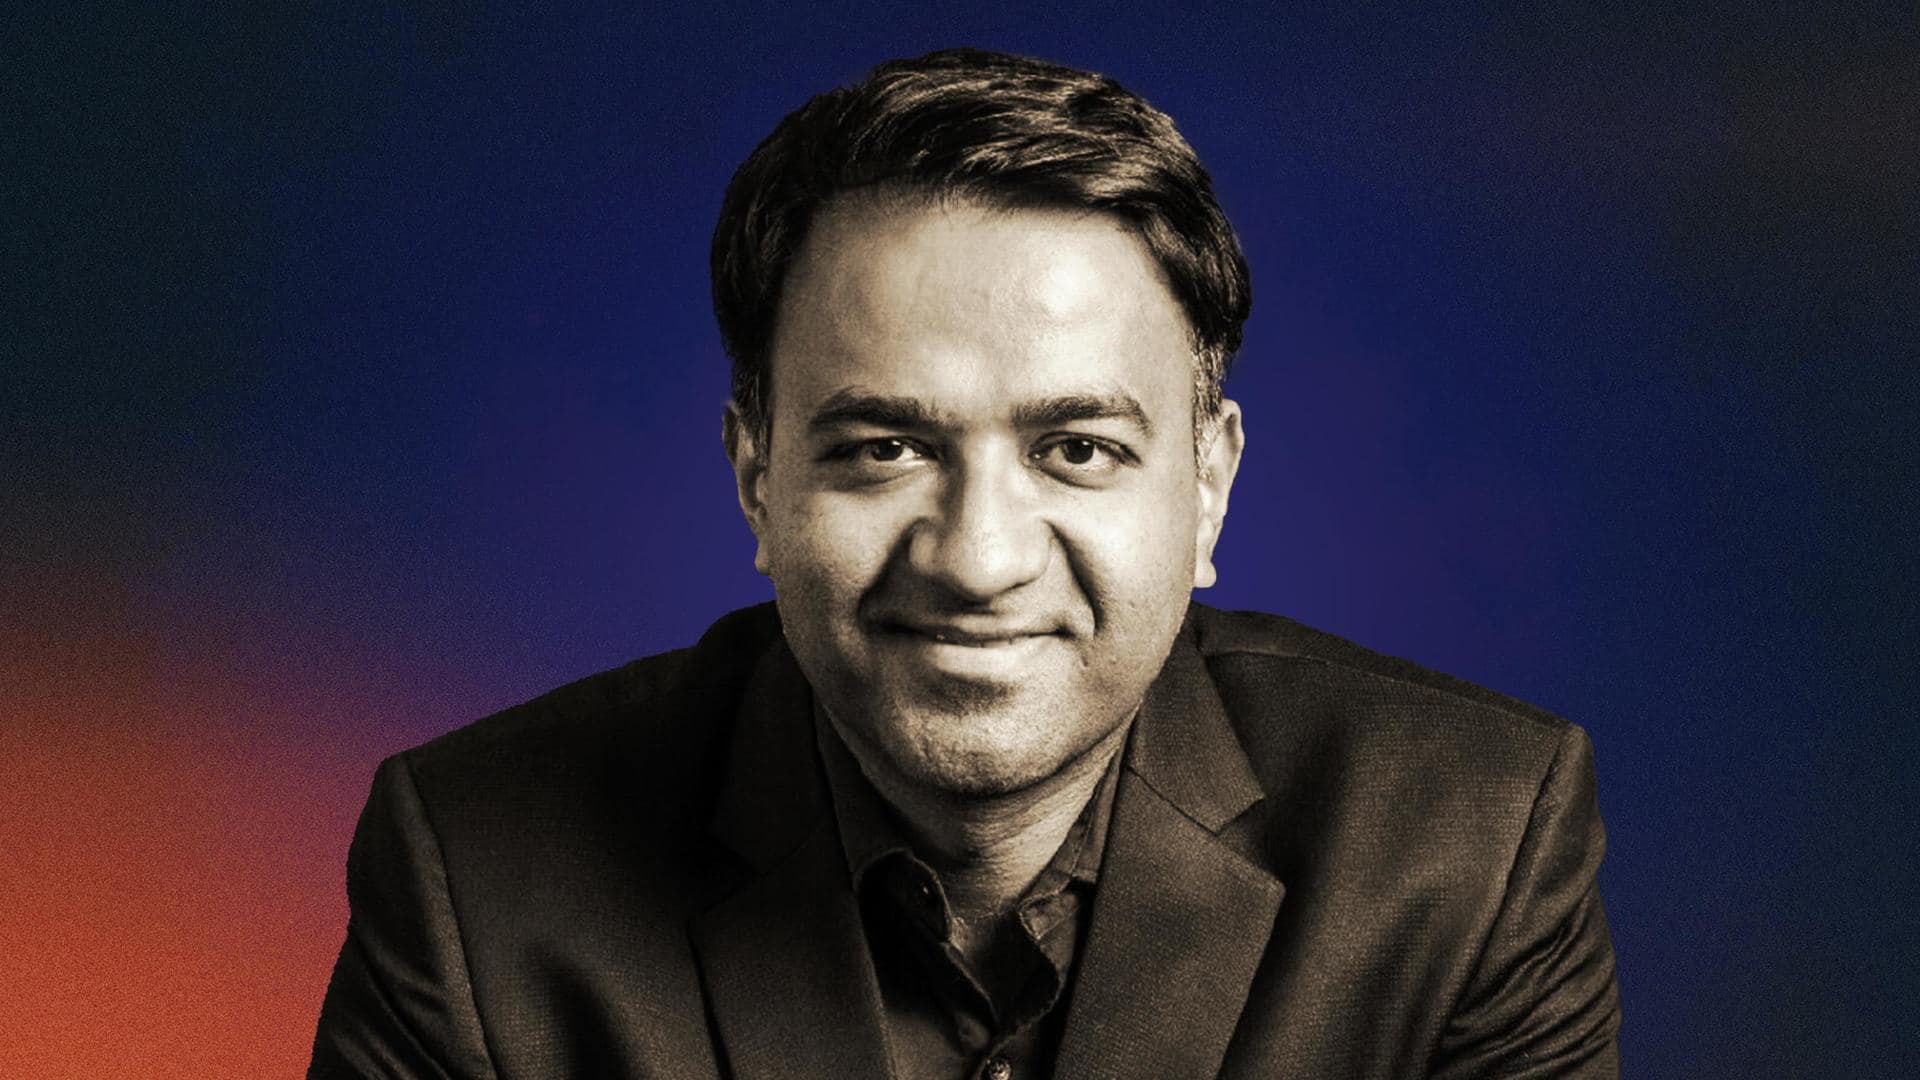 InMobi's Piyush Shah shares mantra for entrepreneurial success and longevity